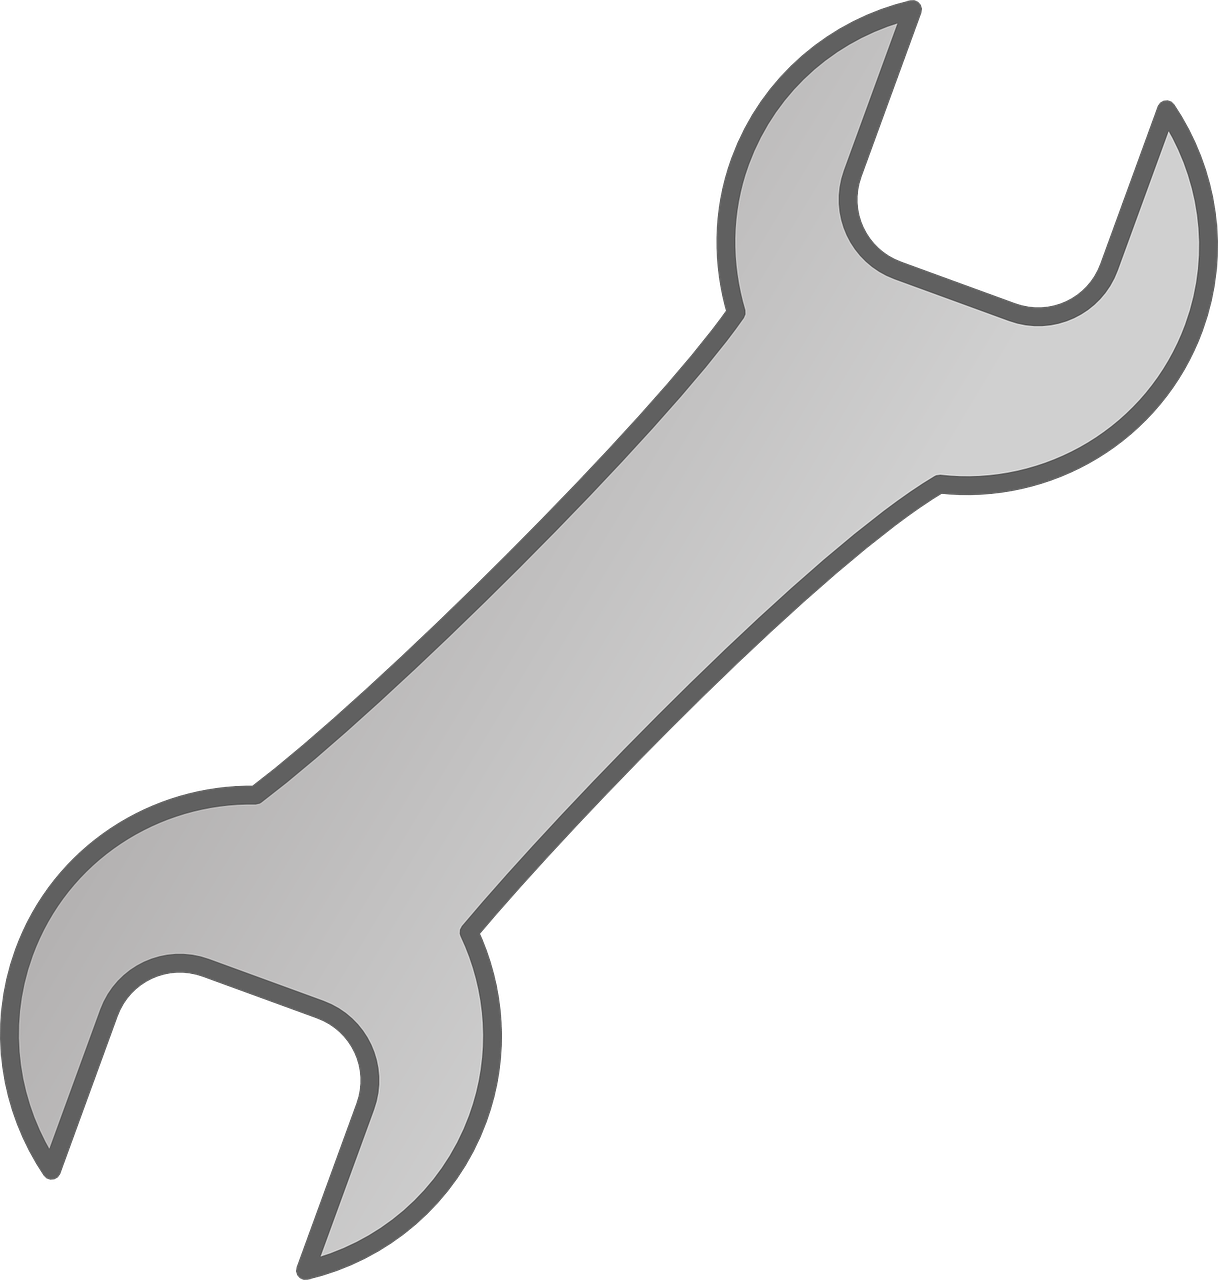 a wrenet on a black background, by Andrei Kolkoutine, pixabay, cobra, wrench, vector image, everyday plain object, gray men